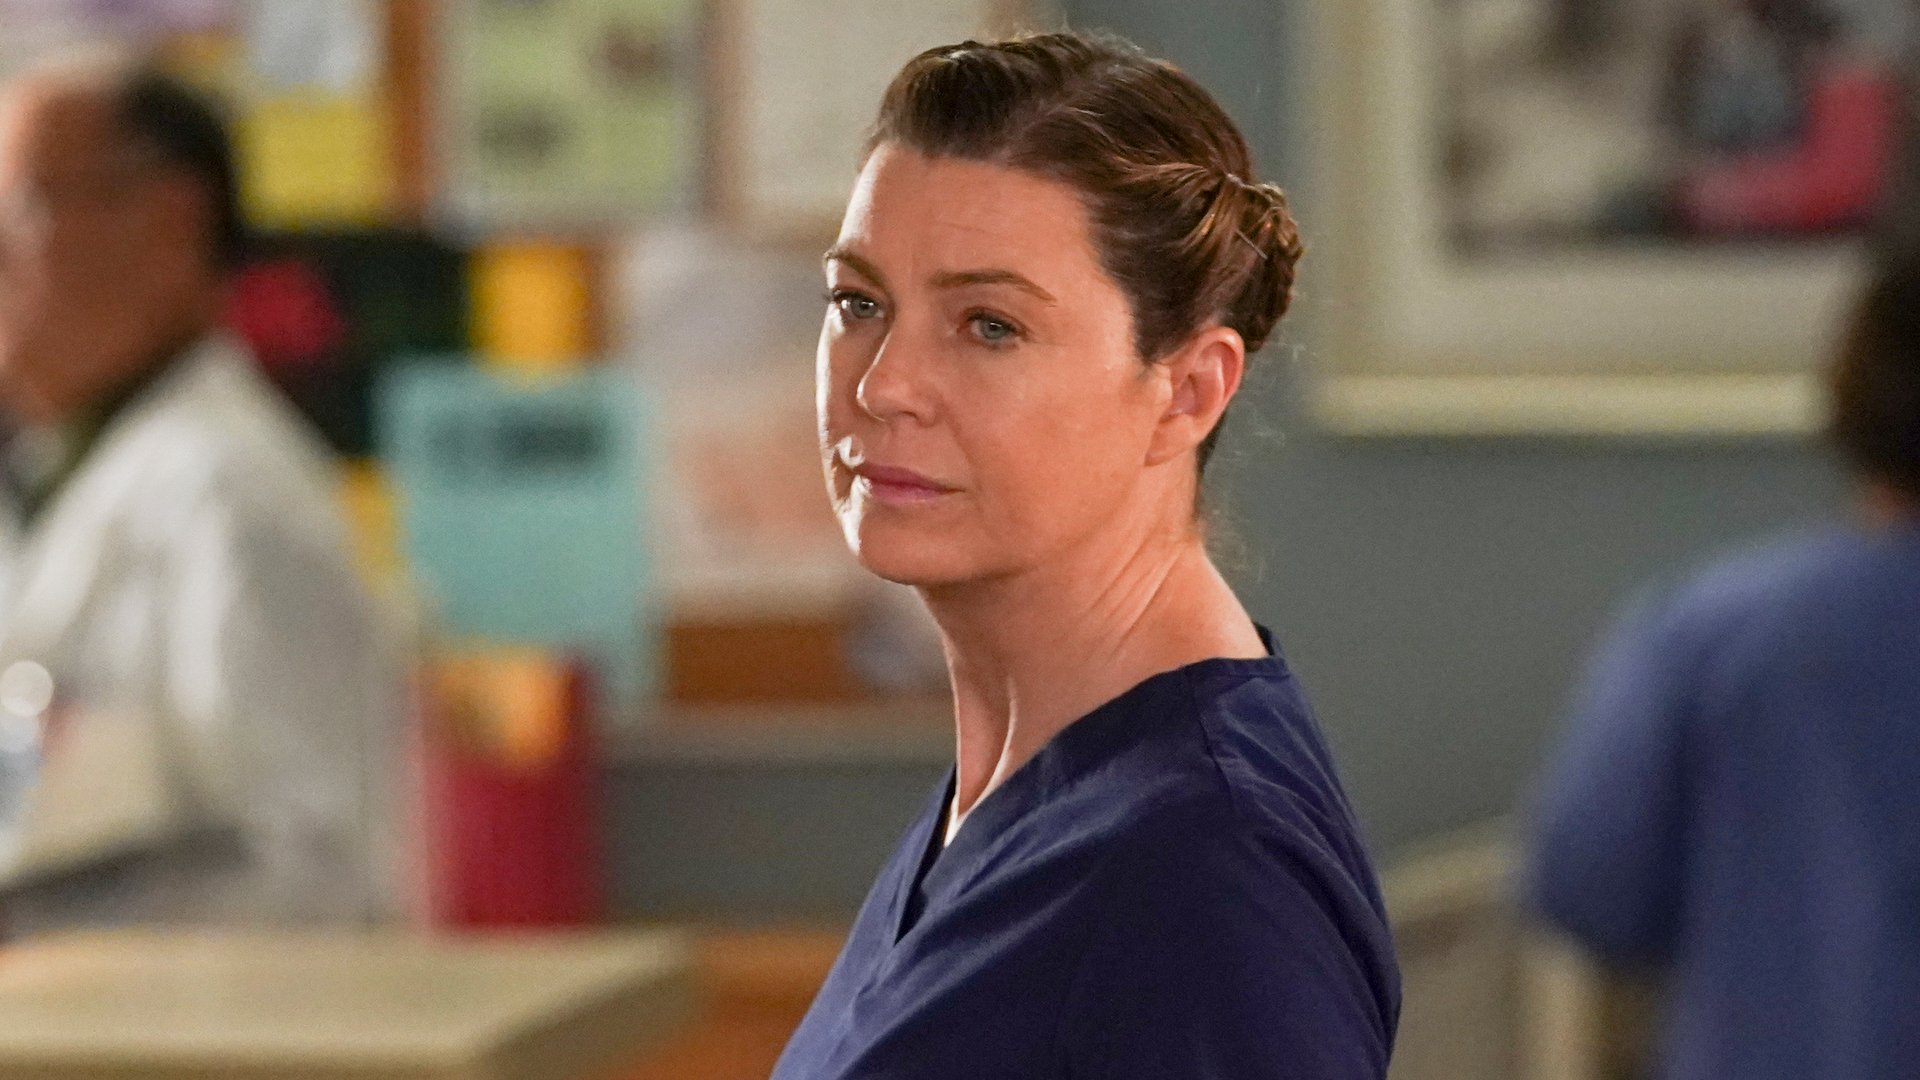 Ellen Pompeo as Meredith Grey on 'Grey's Anatomy' 2020